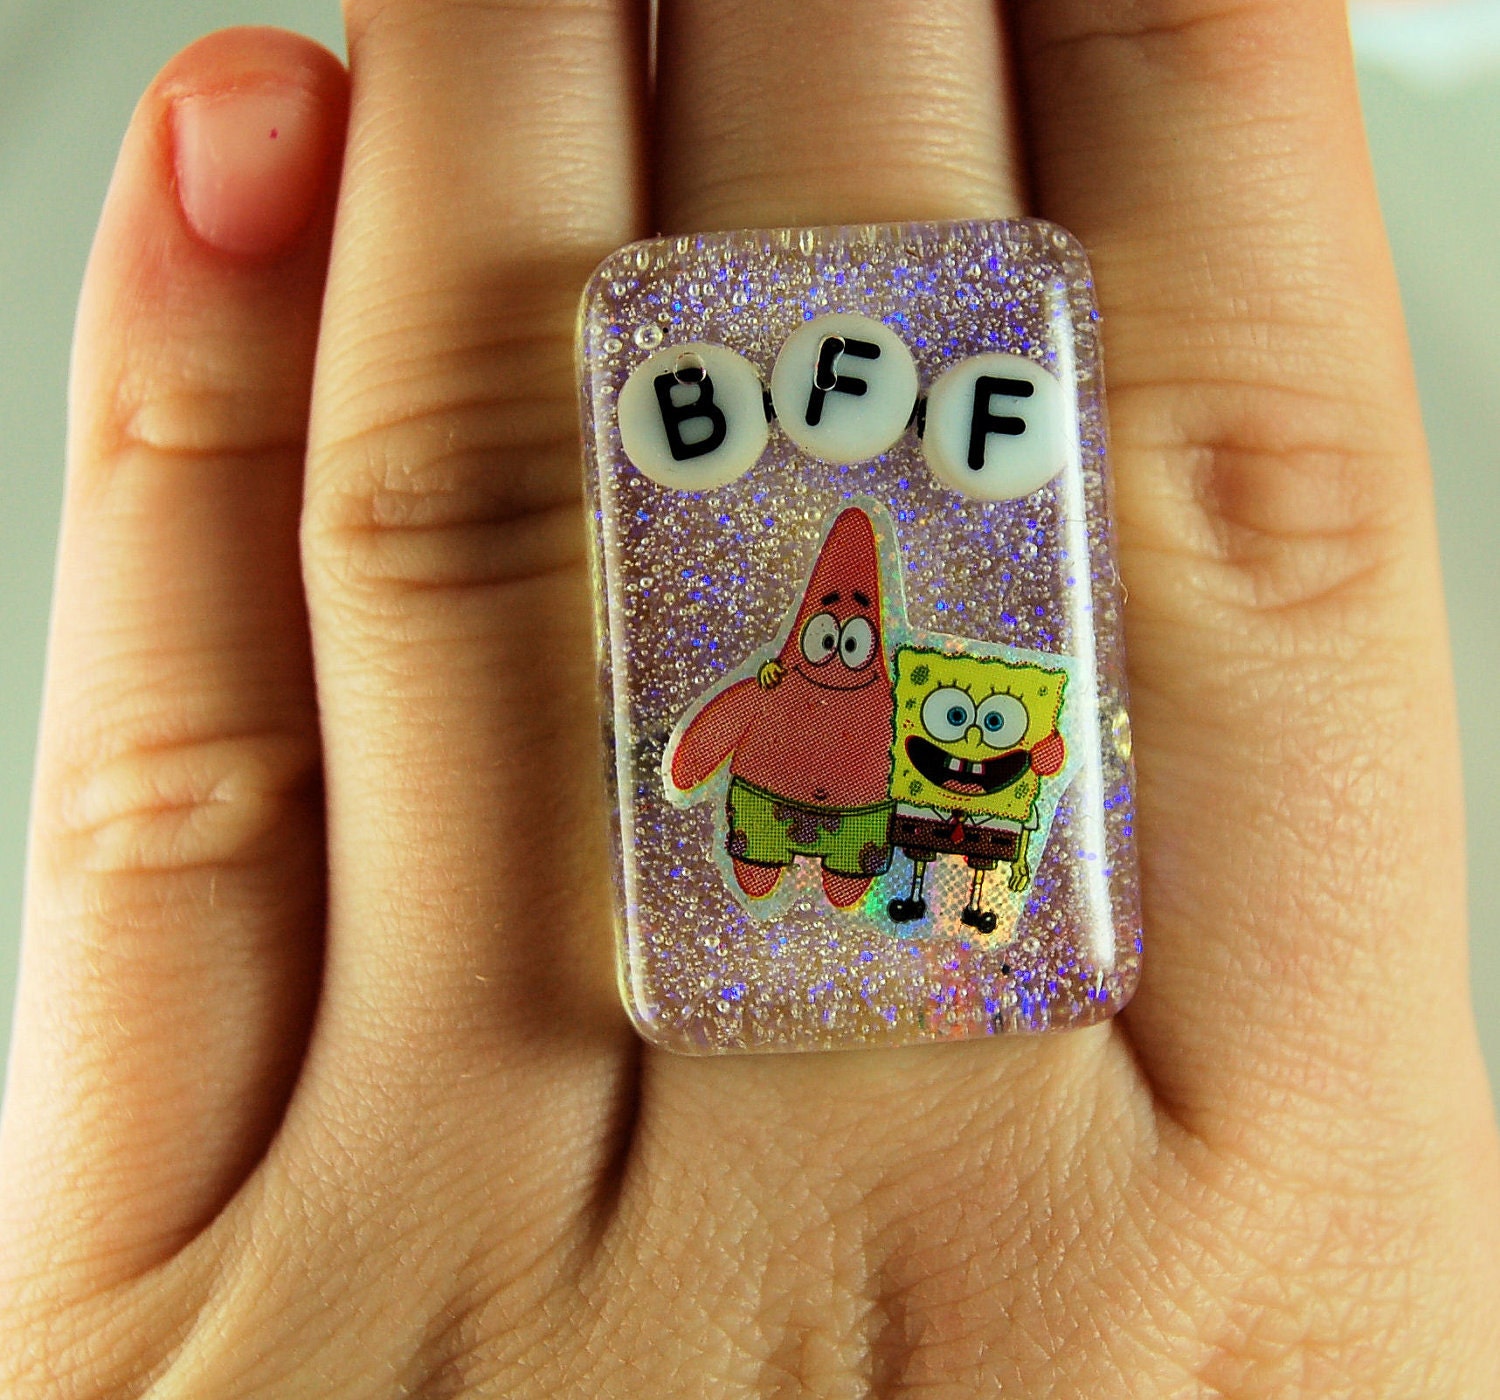 Spongebob and Patrick BFF resin ring